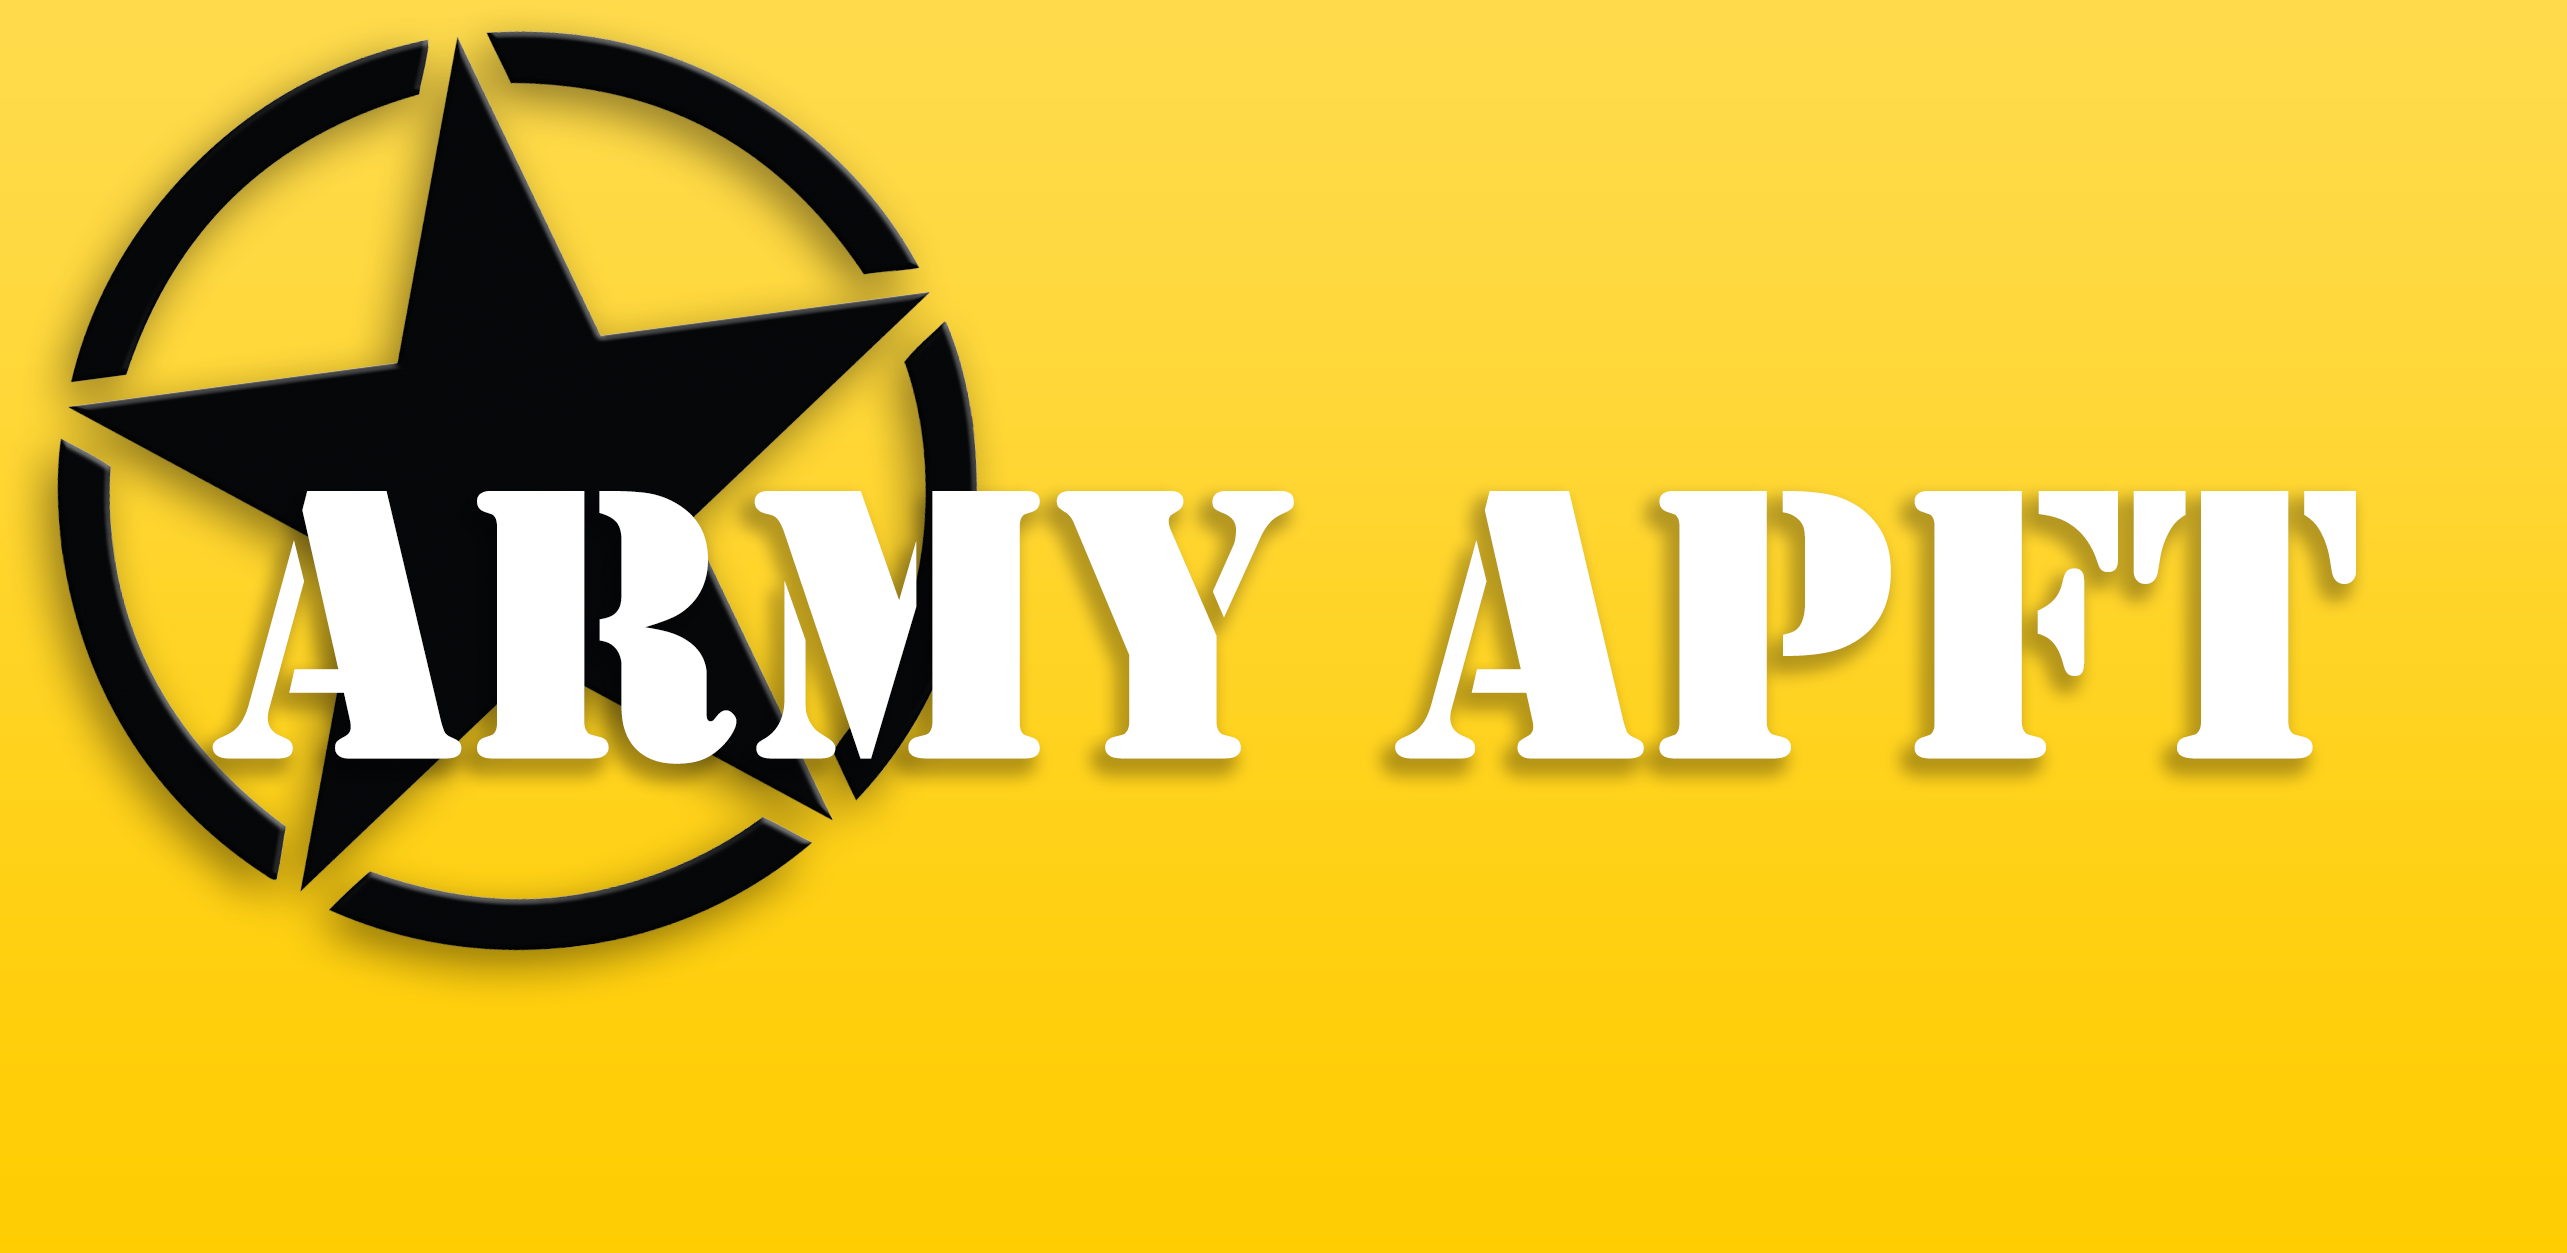 Army APFT App